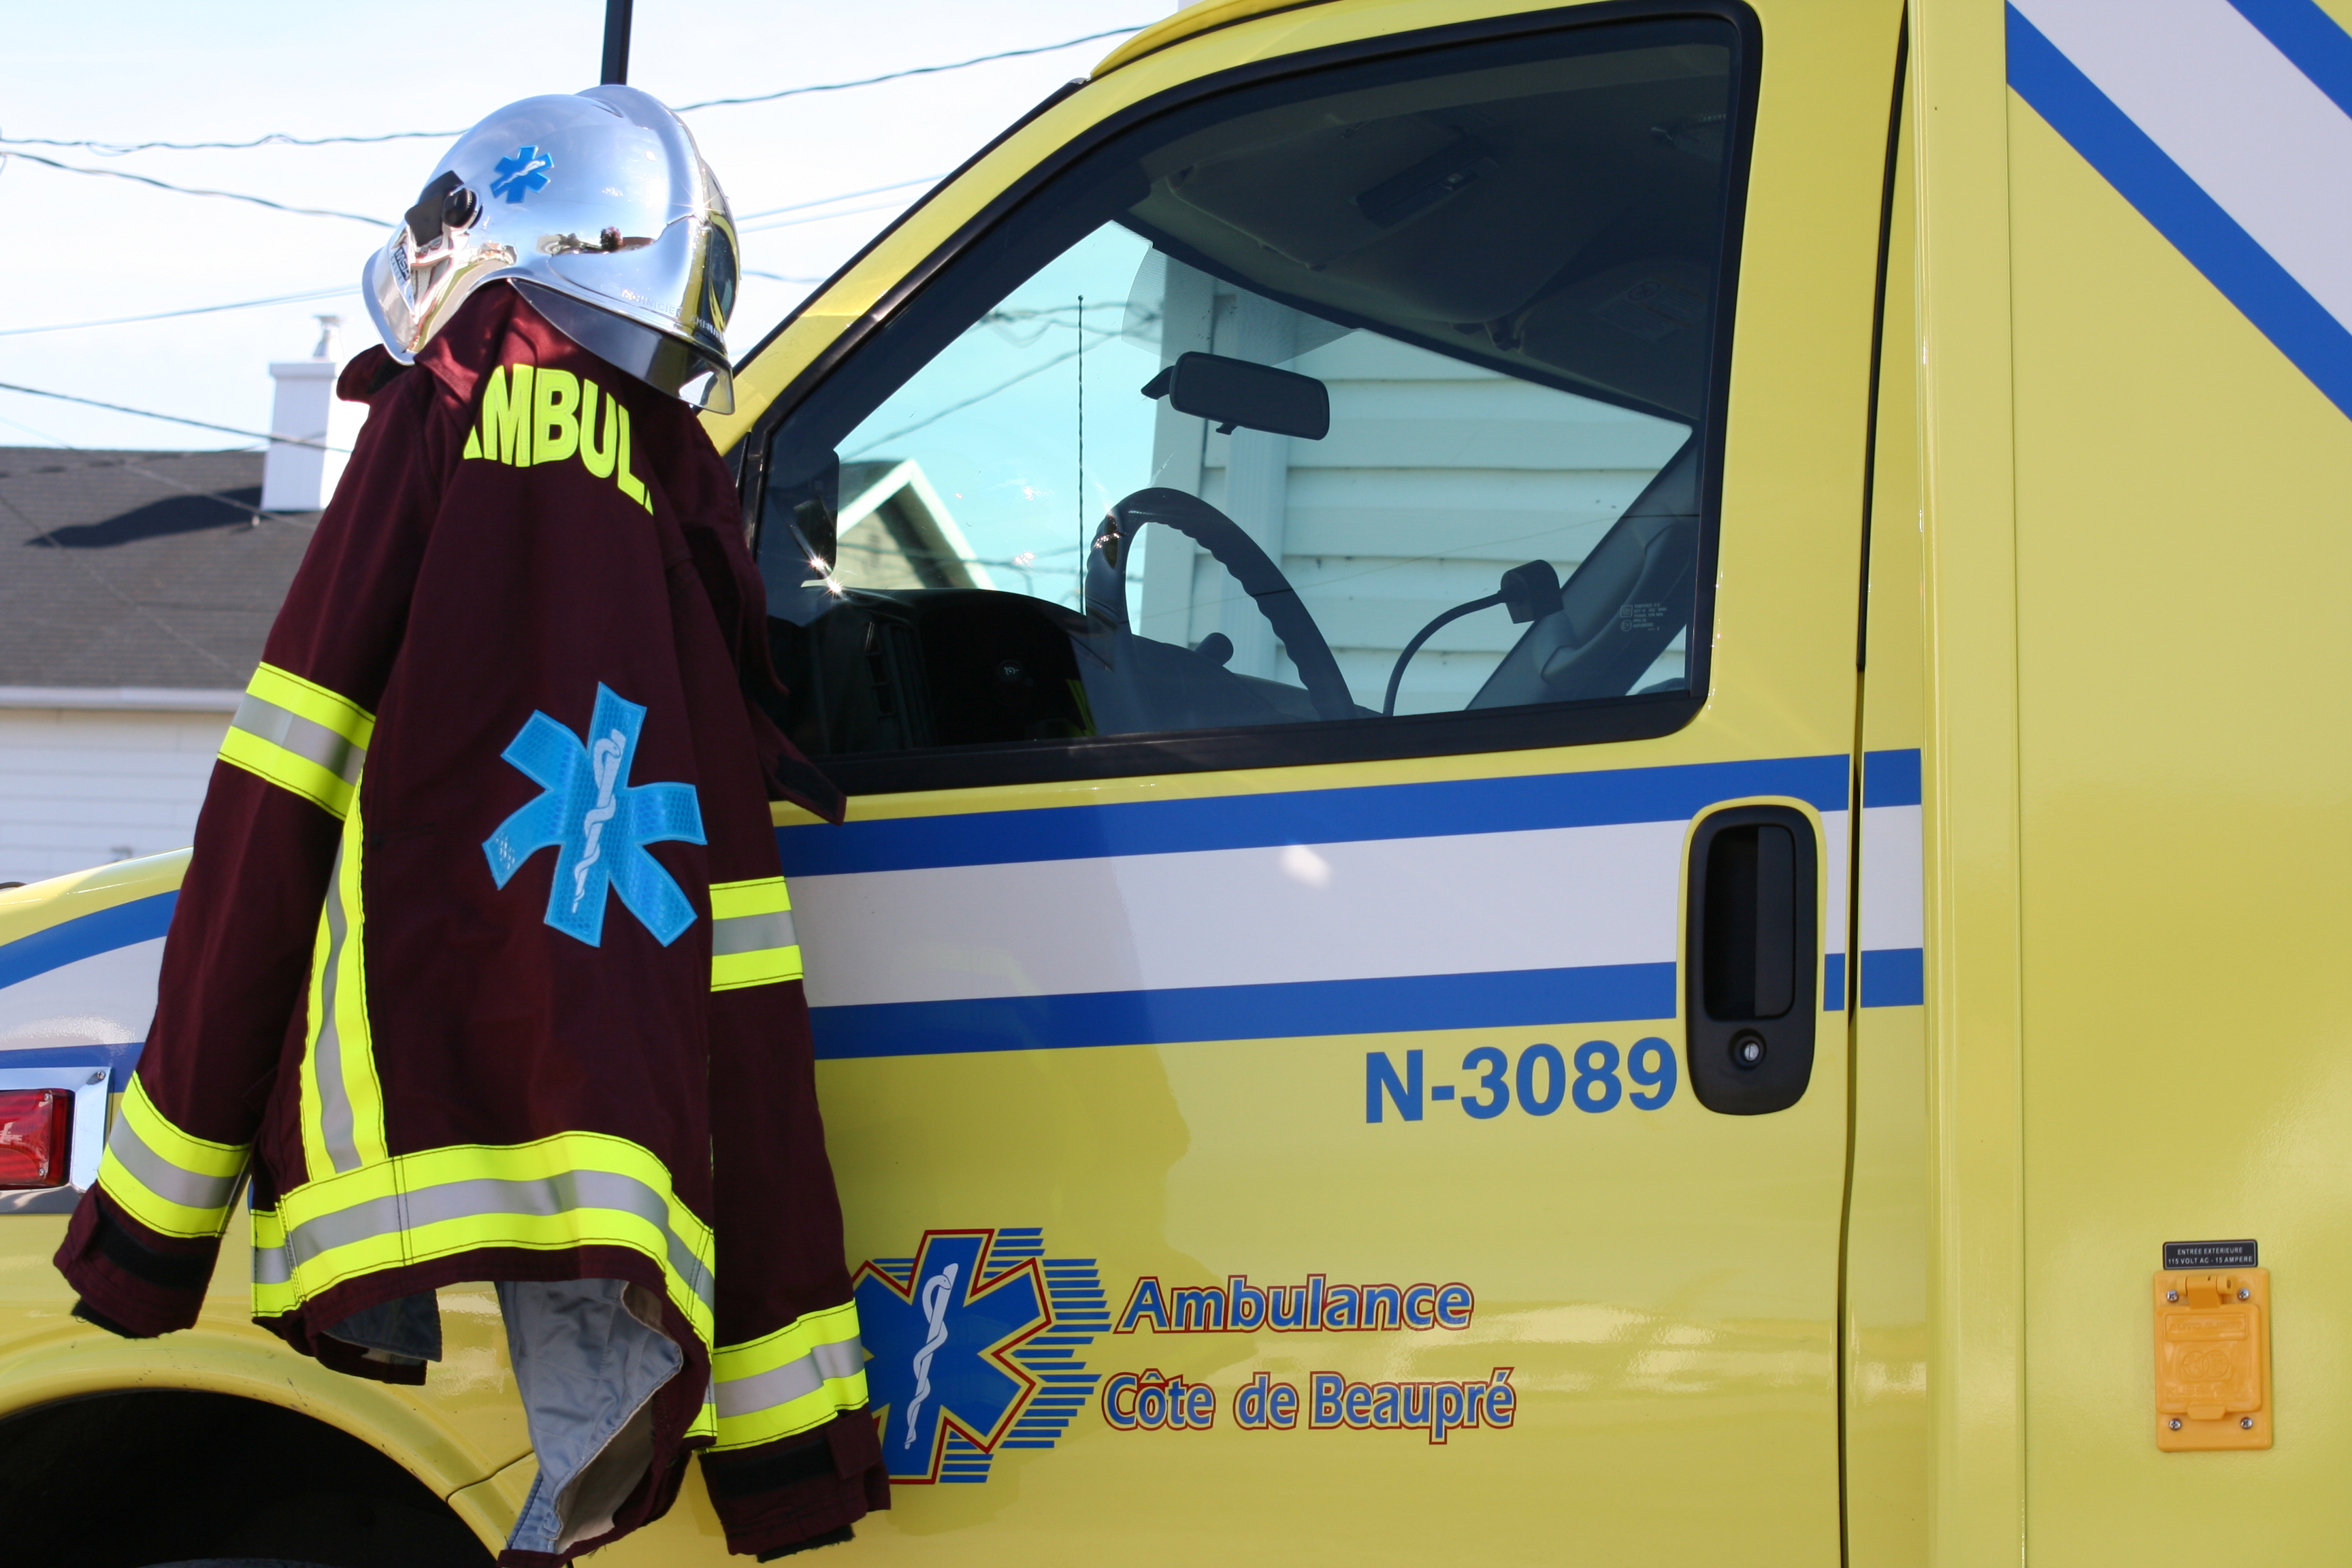 Assistance Ambulance Nantes